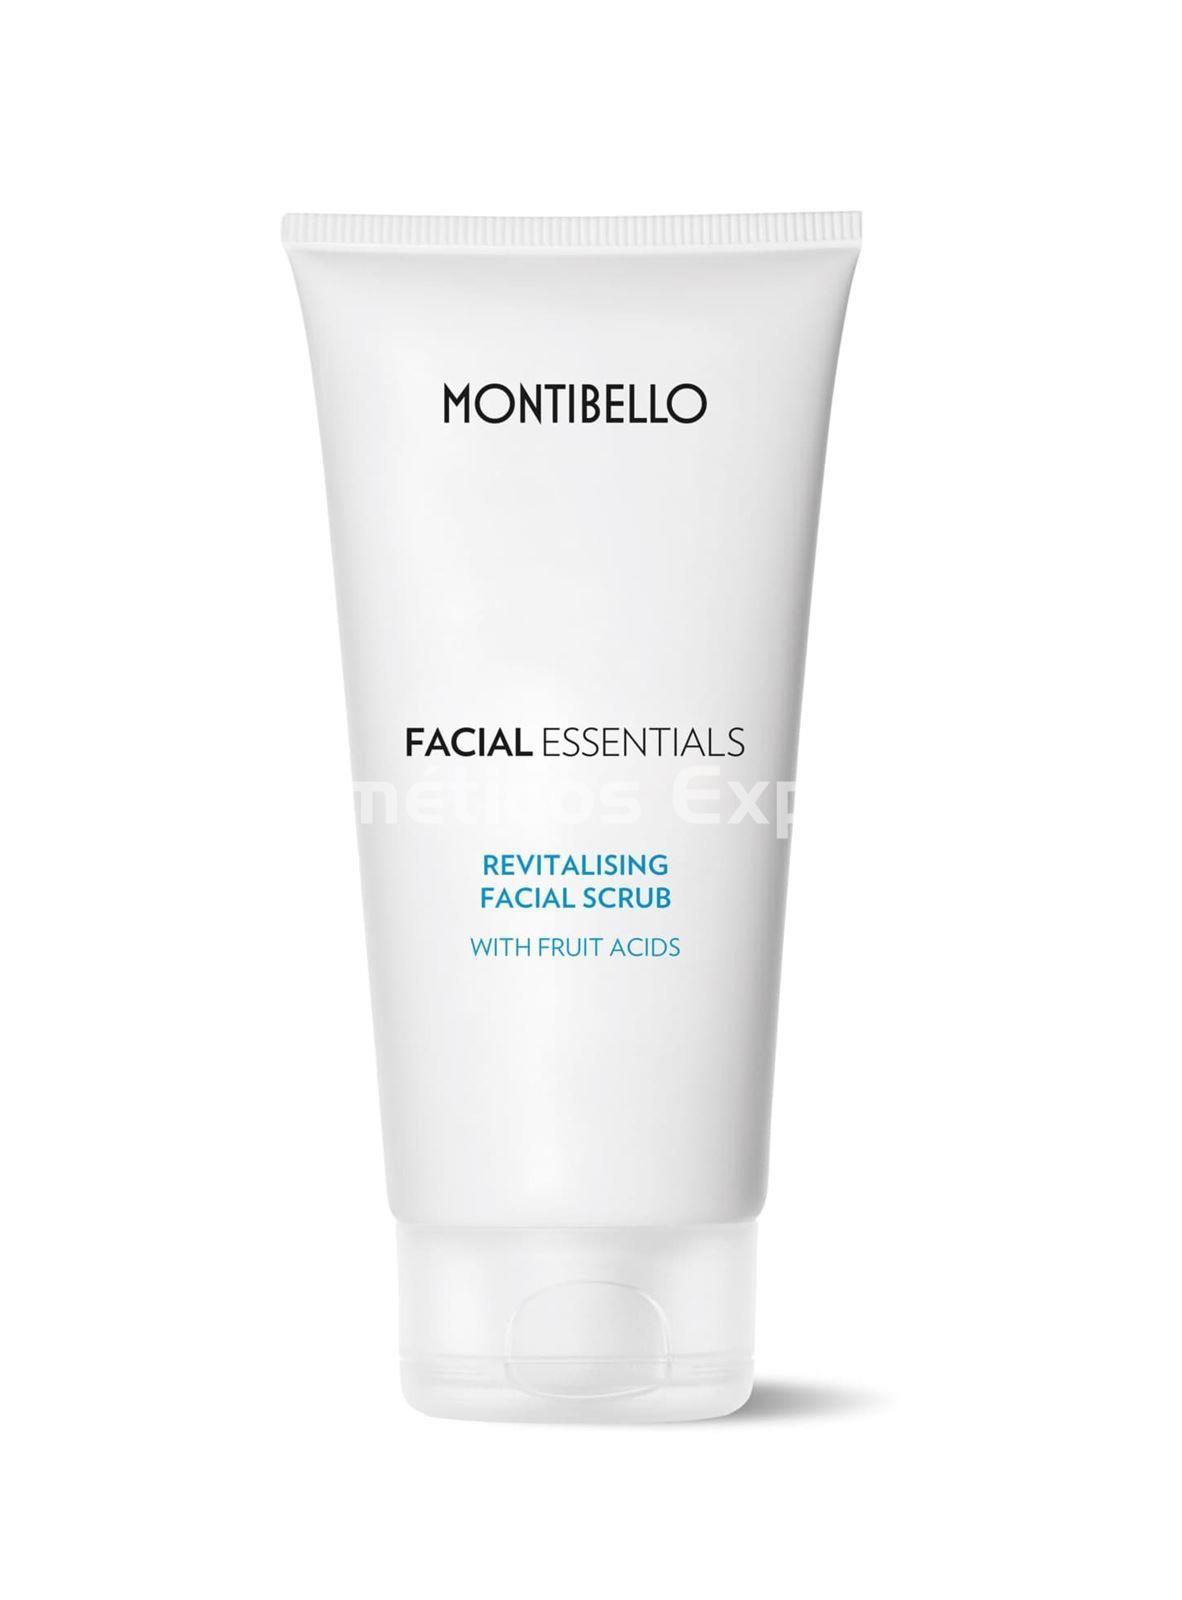 Montibello Exfoliante Revitalising Facial Scrub Facial Essentials - Imagen 1